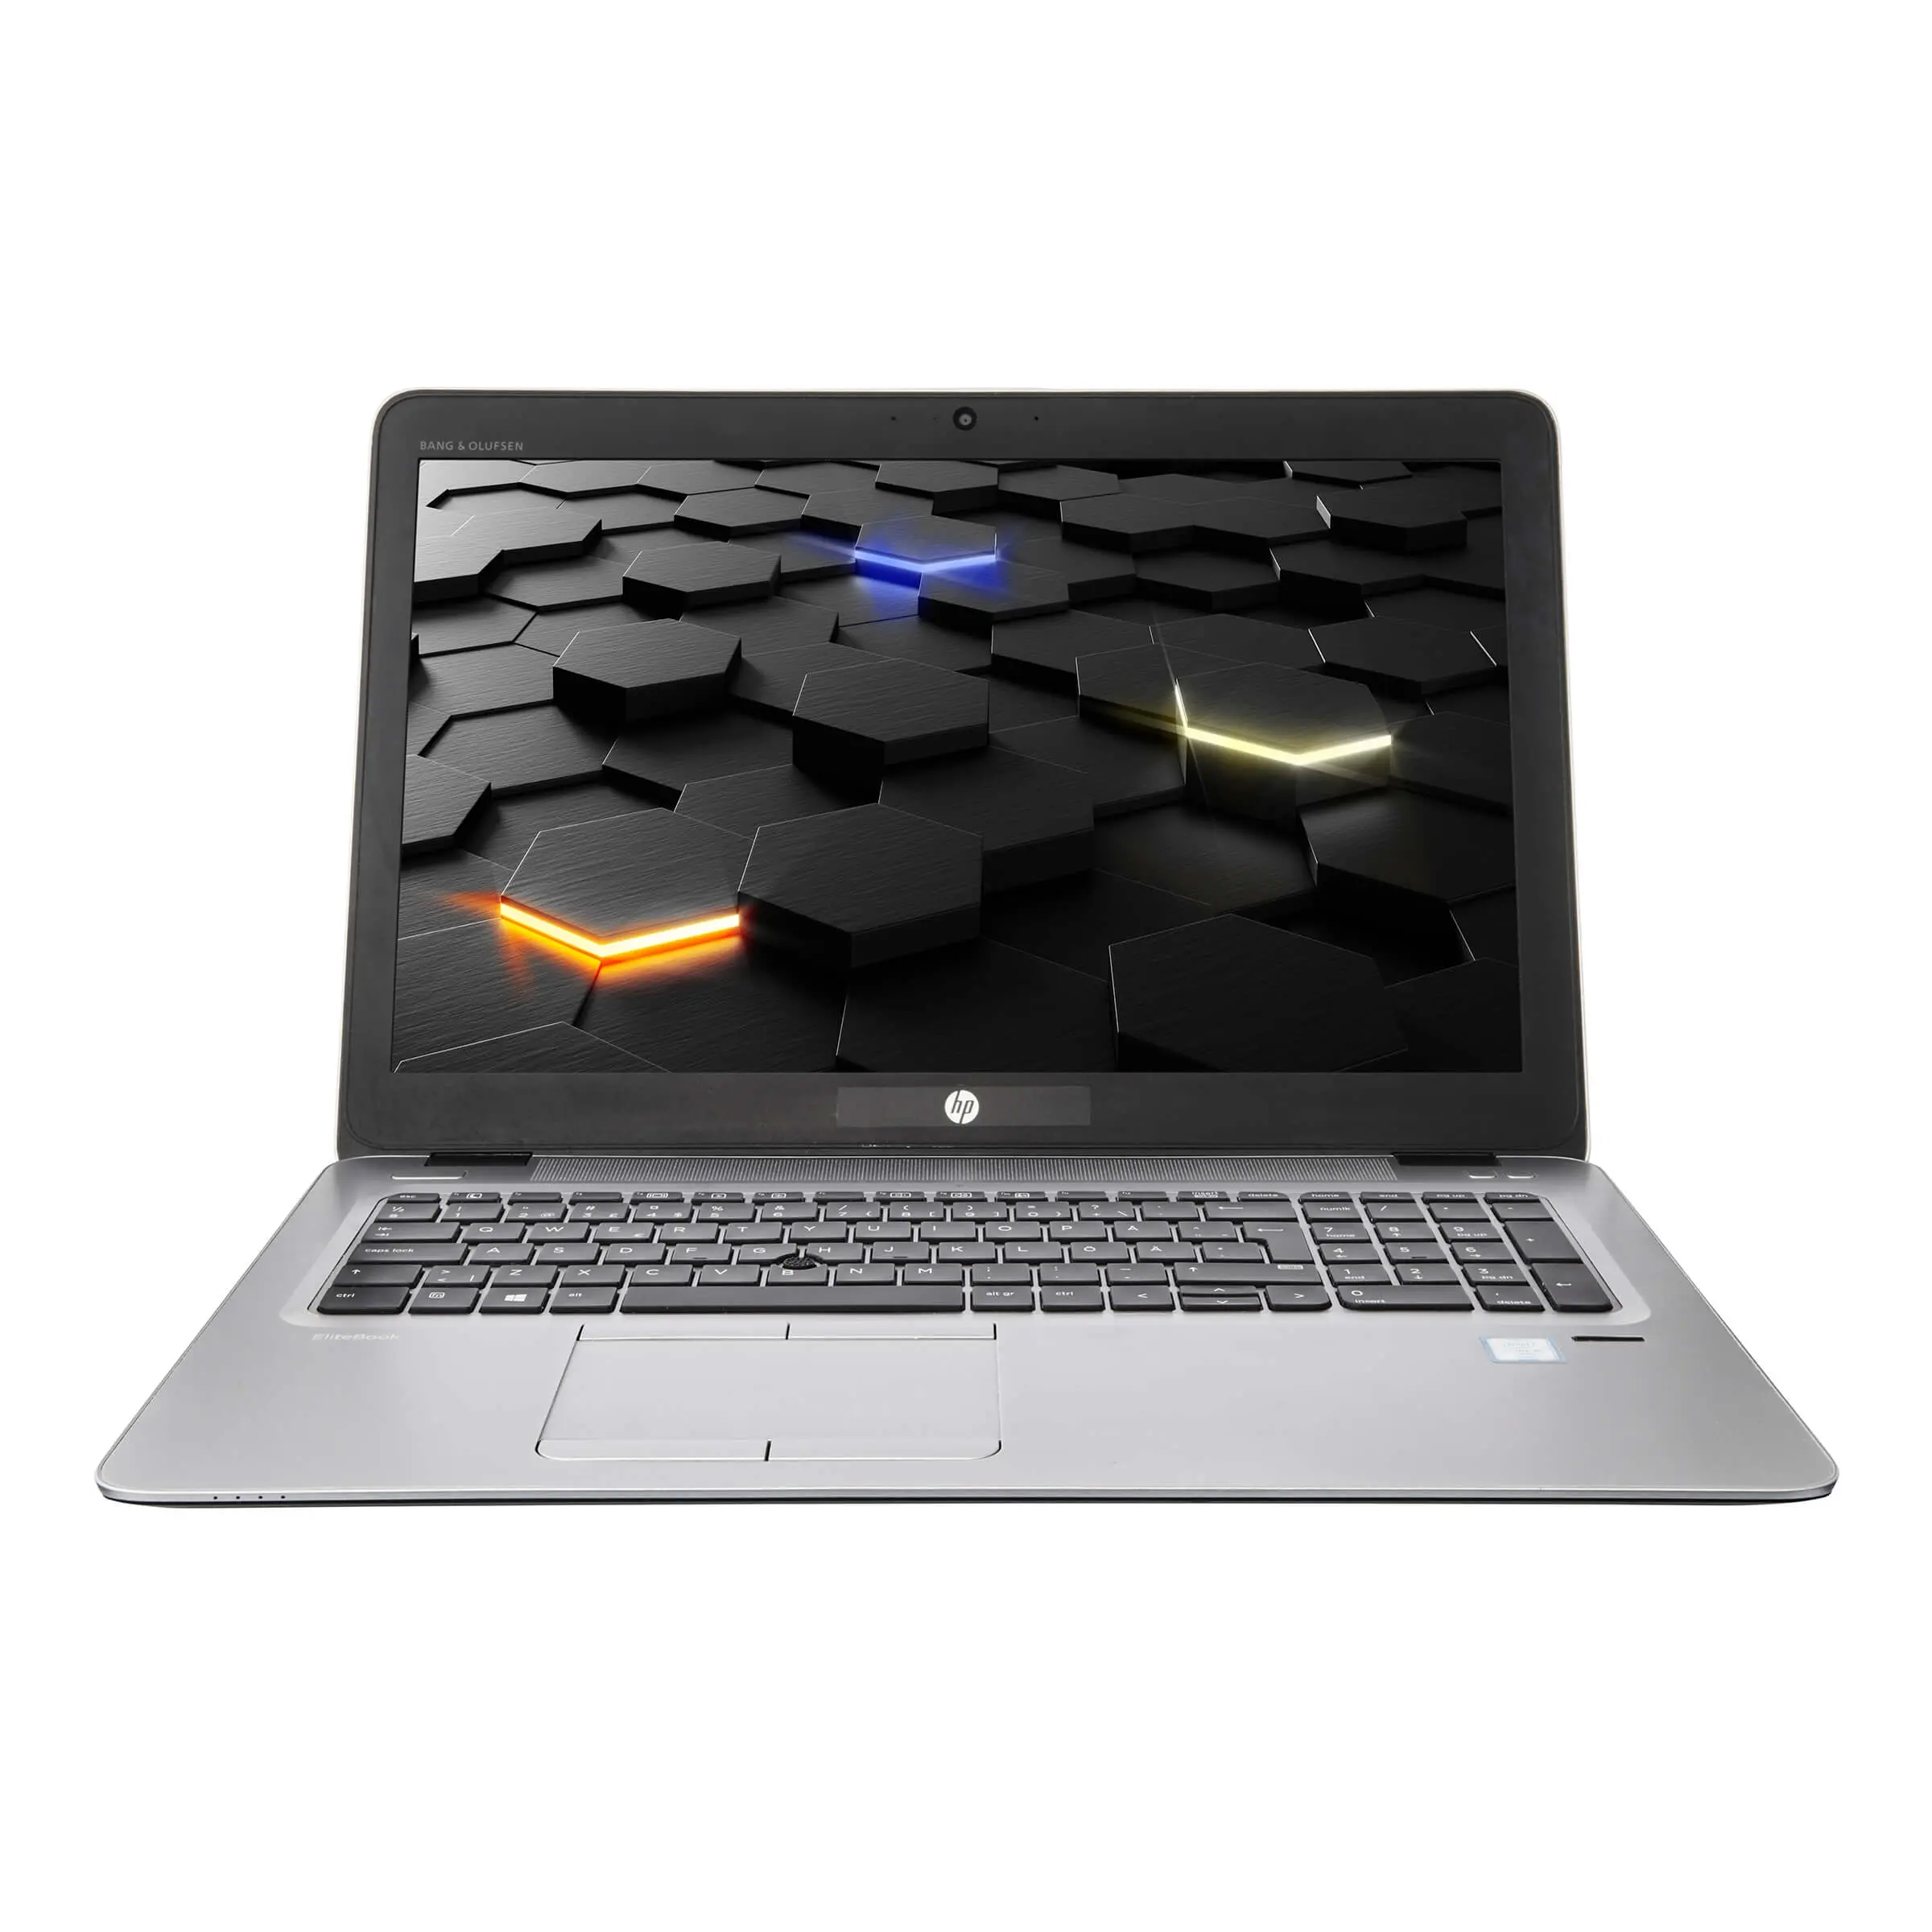 HP EliteBook 850 G3, i5, 15.6 Zoll Full-HD IPS, 8GB, 1TB HDD, Webcam, Windows 10 Pro